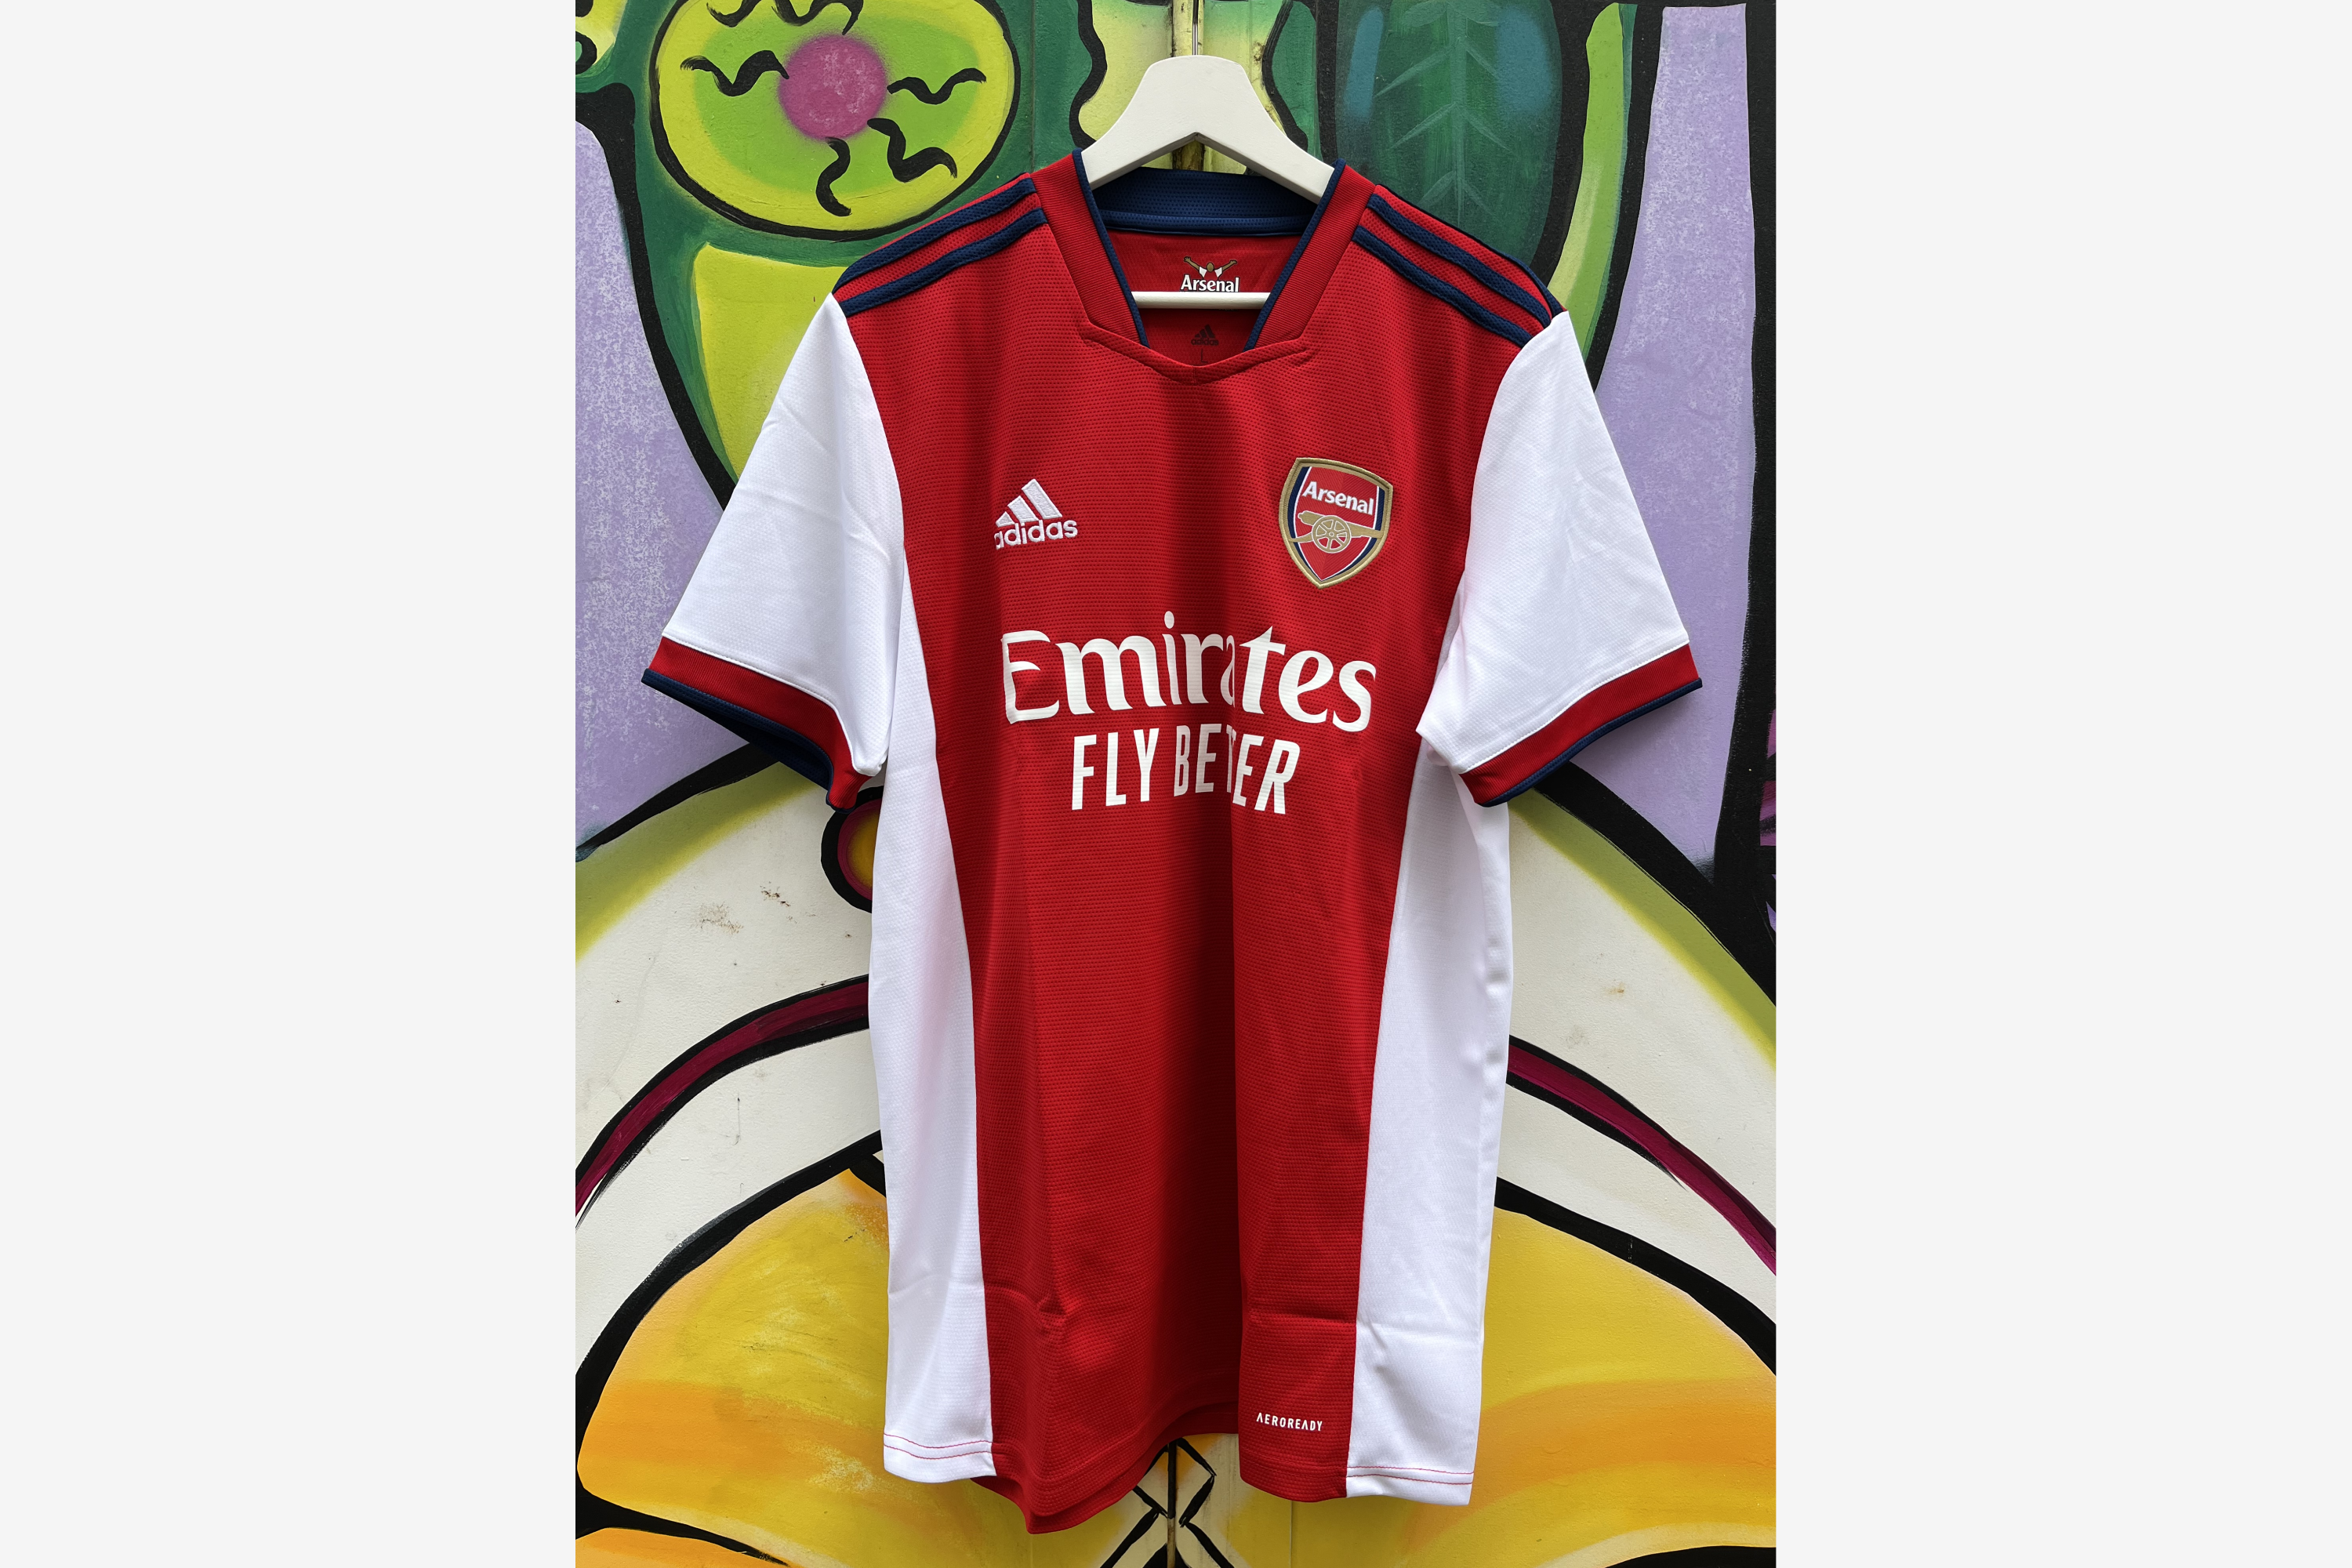 Adidas - Arsenal 2021/22 Home Football Shirt 'SAKA' (Fan Edition)